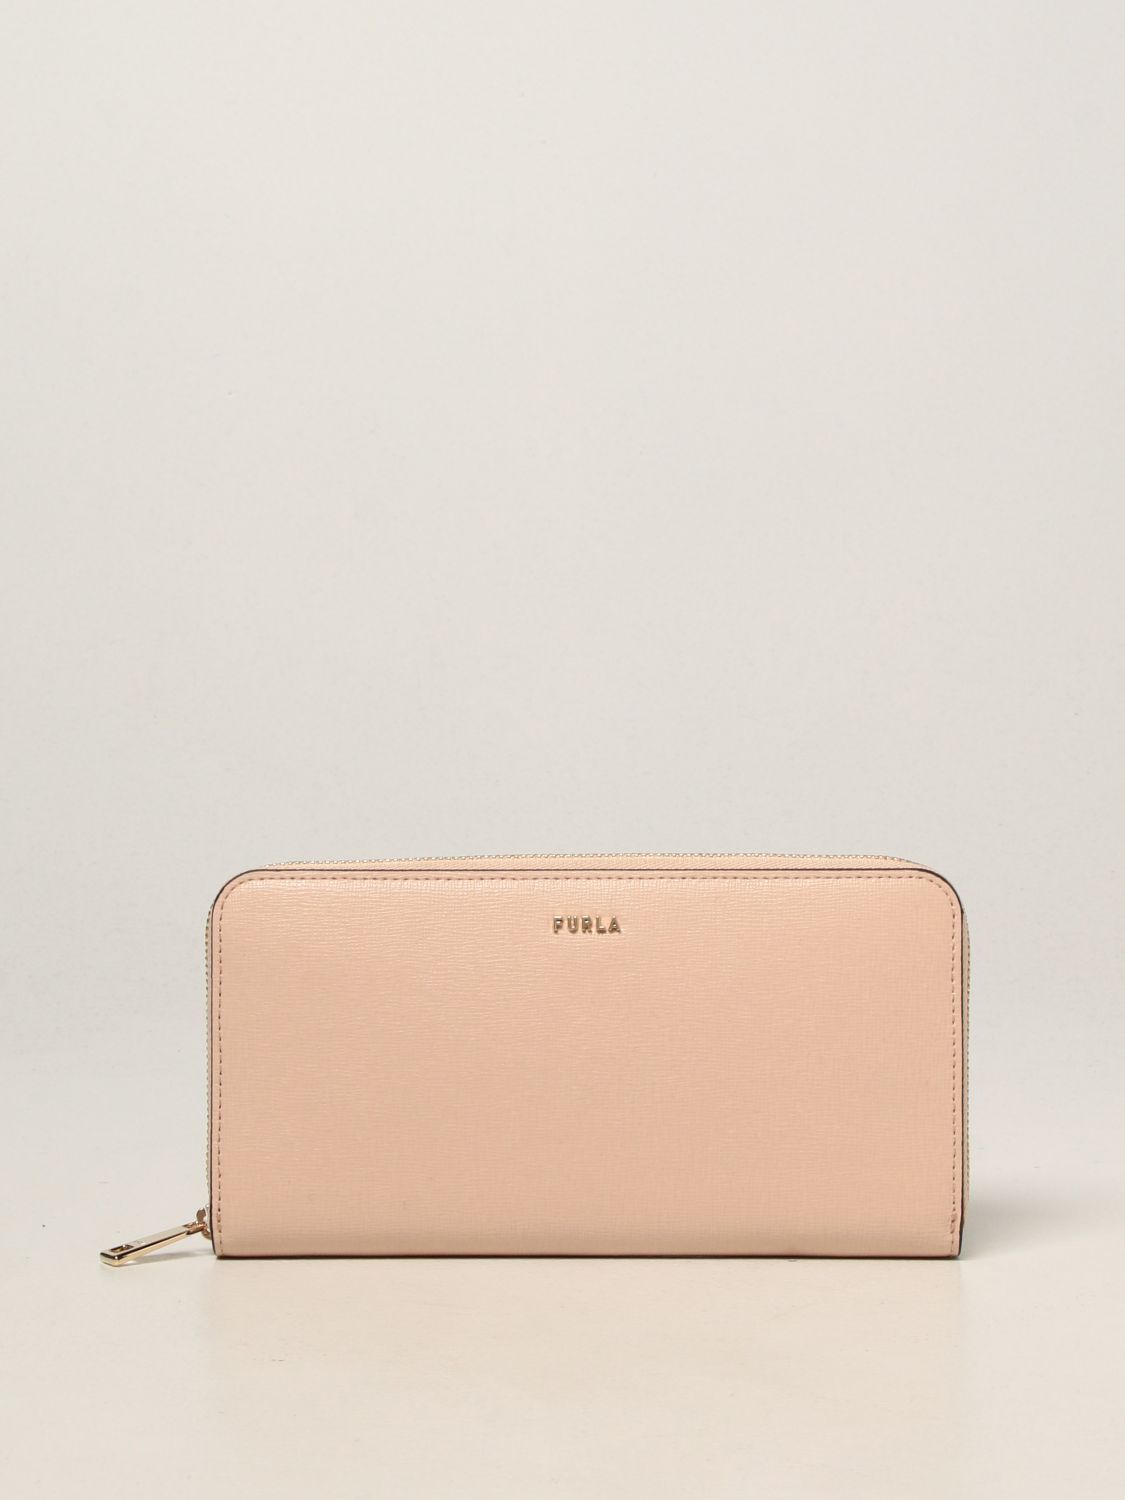 FURLA: Xl wallet in leather - Pink | Furla wallet PCX7UNOB30000 on GIGLIO.COM